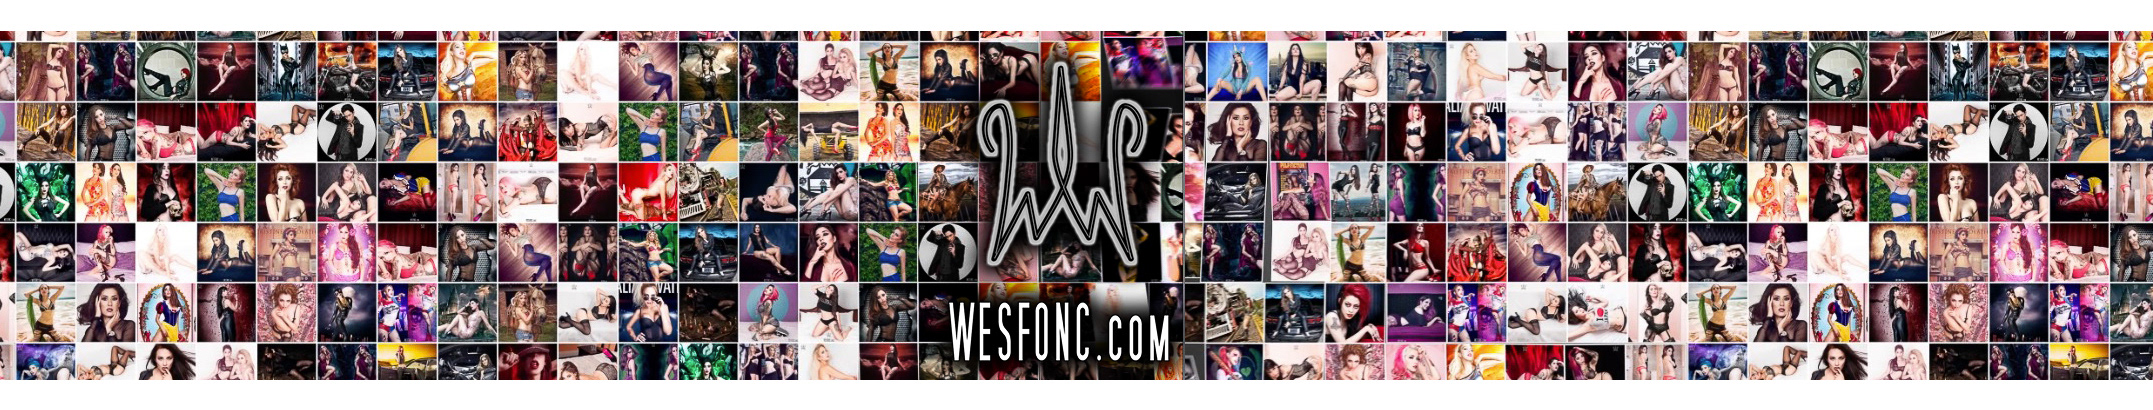 Wes Fonc's profile banner